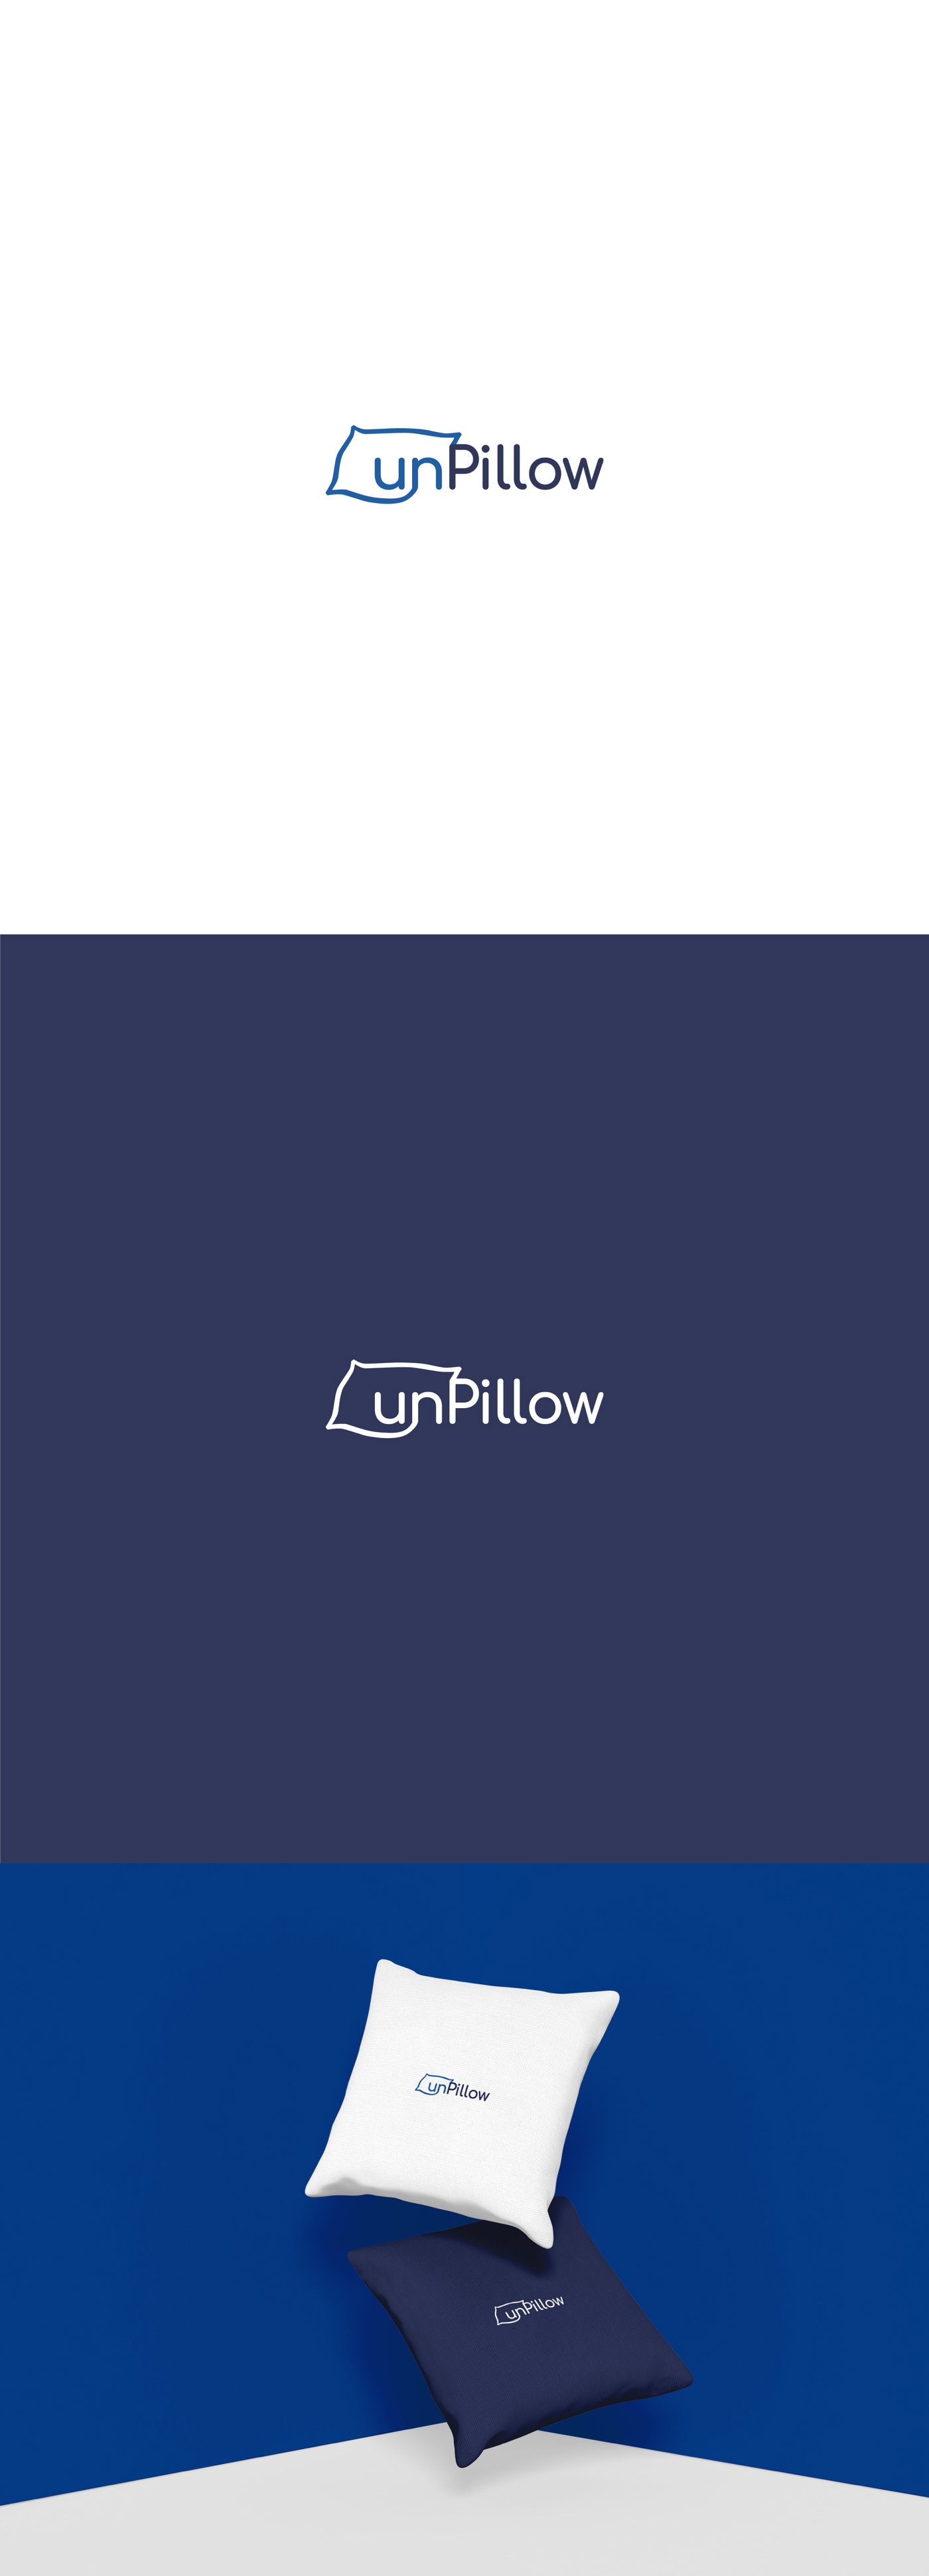 logo pillow